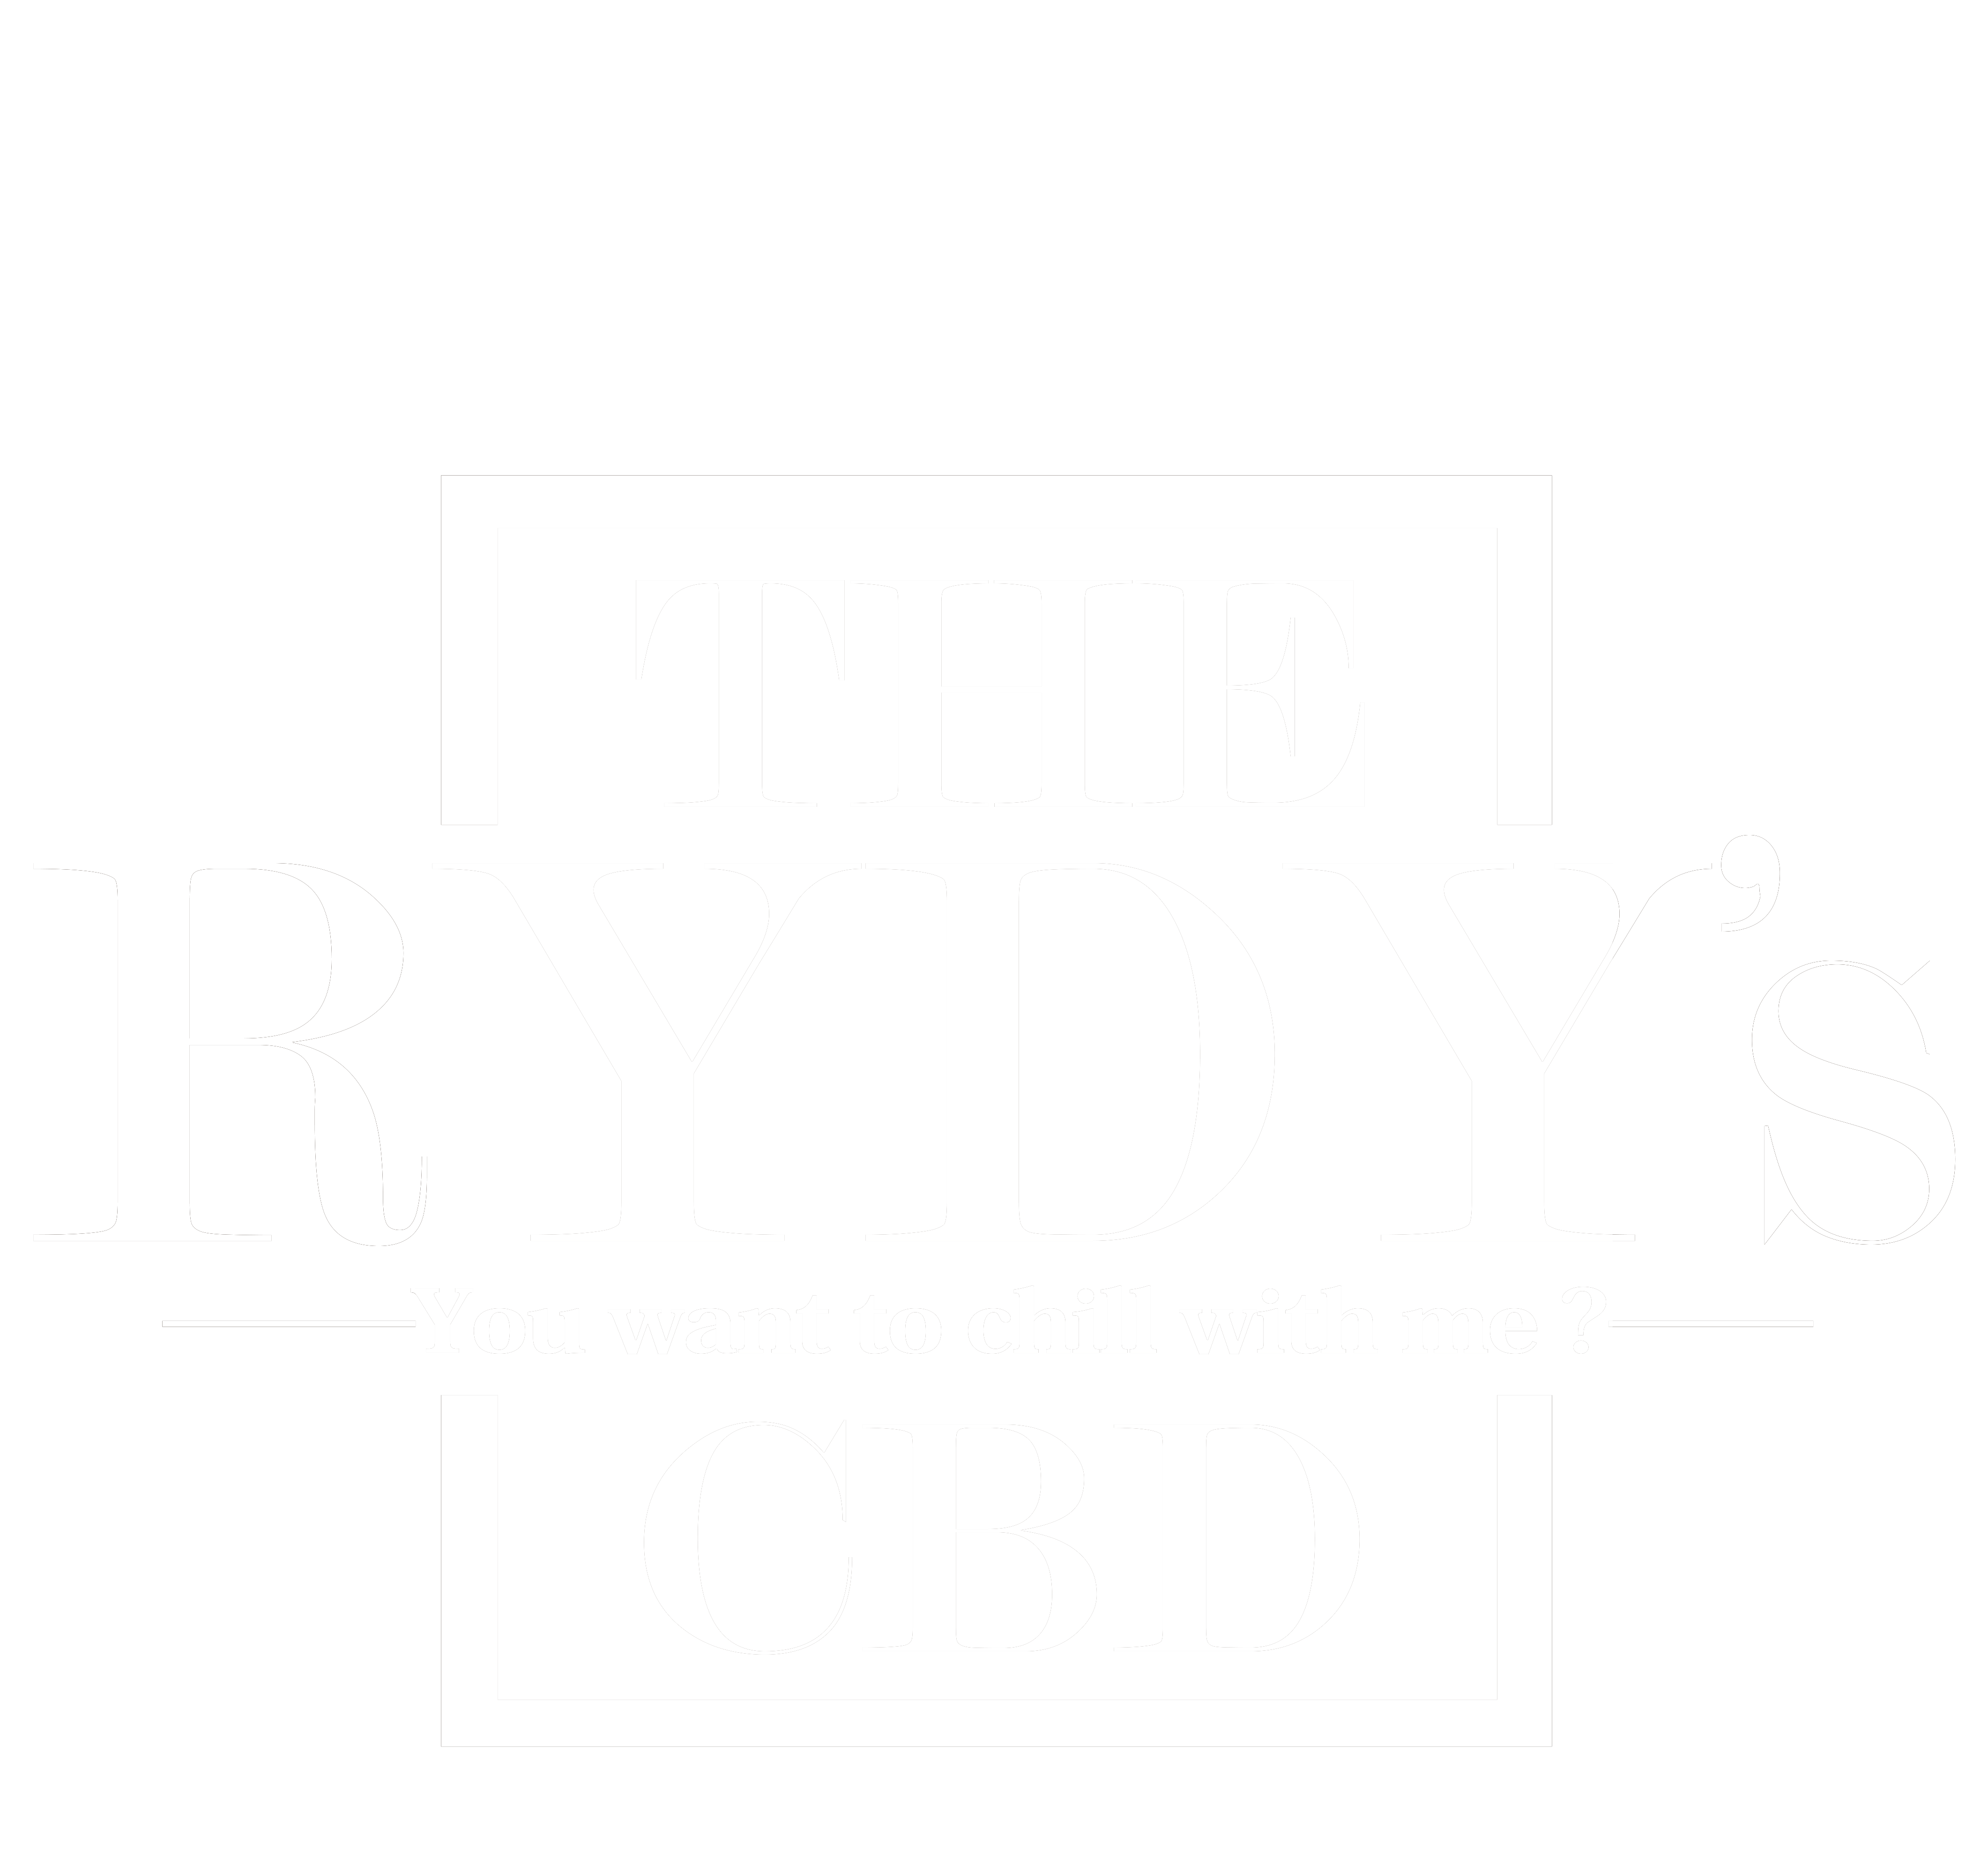 THE RYDY'S CBD